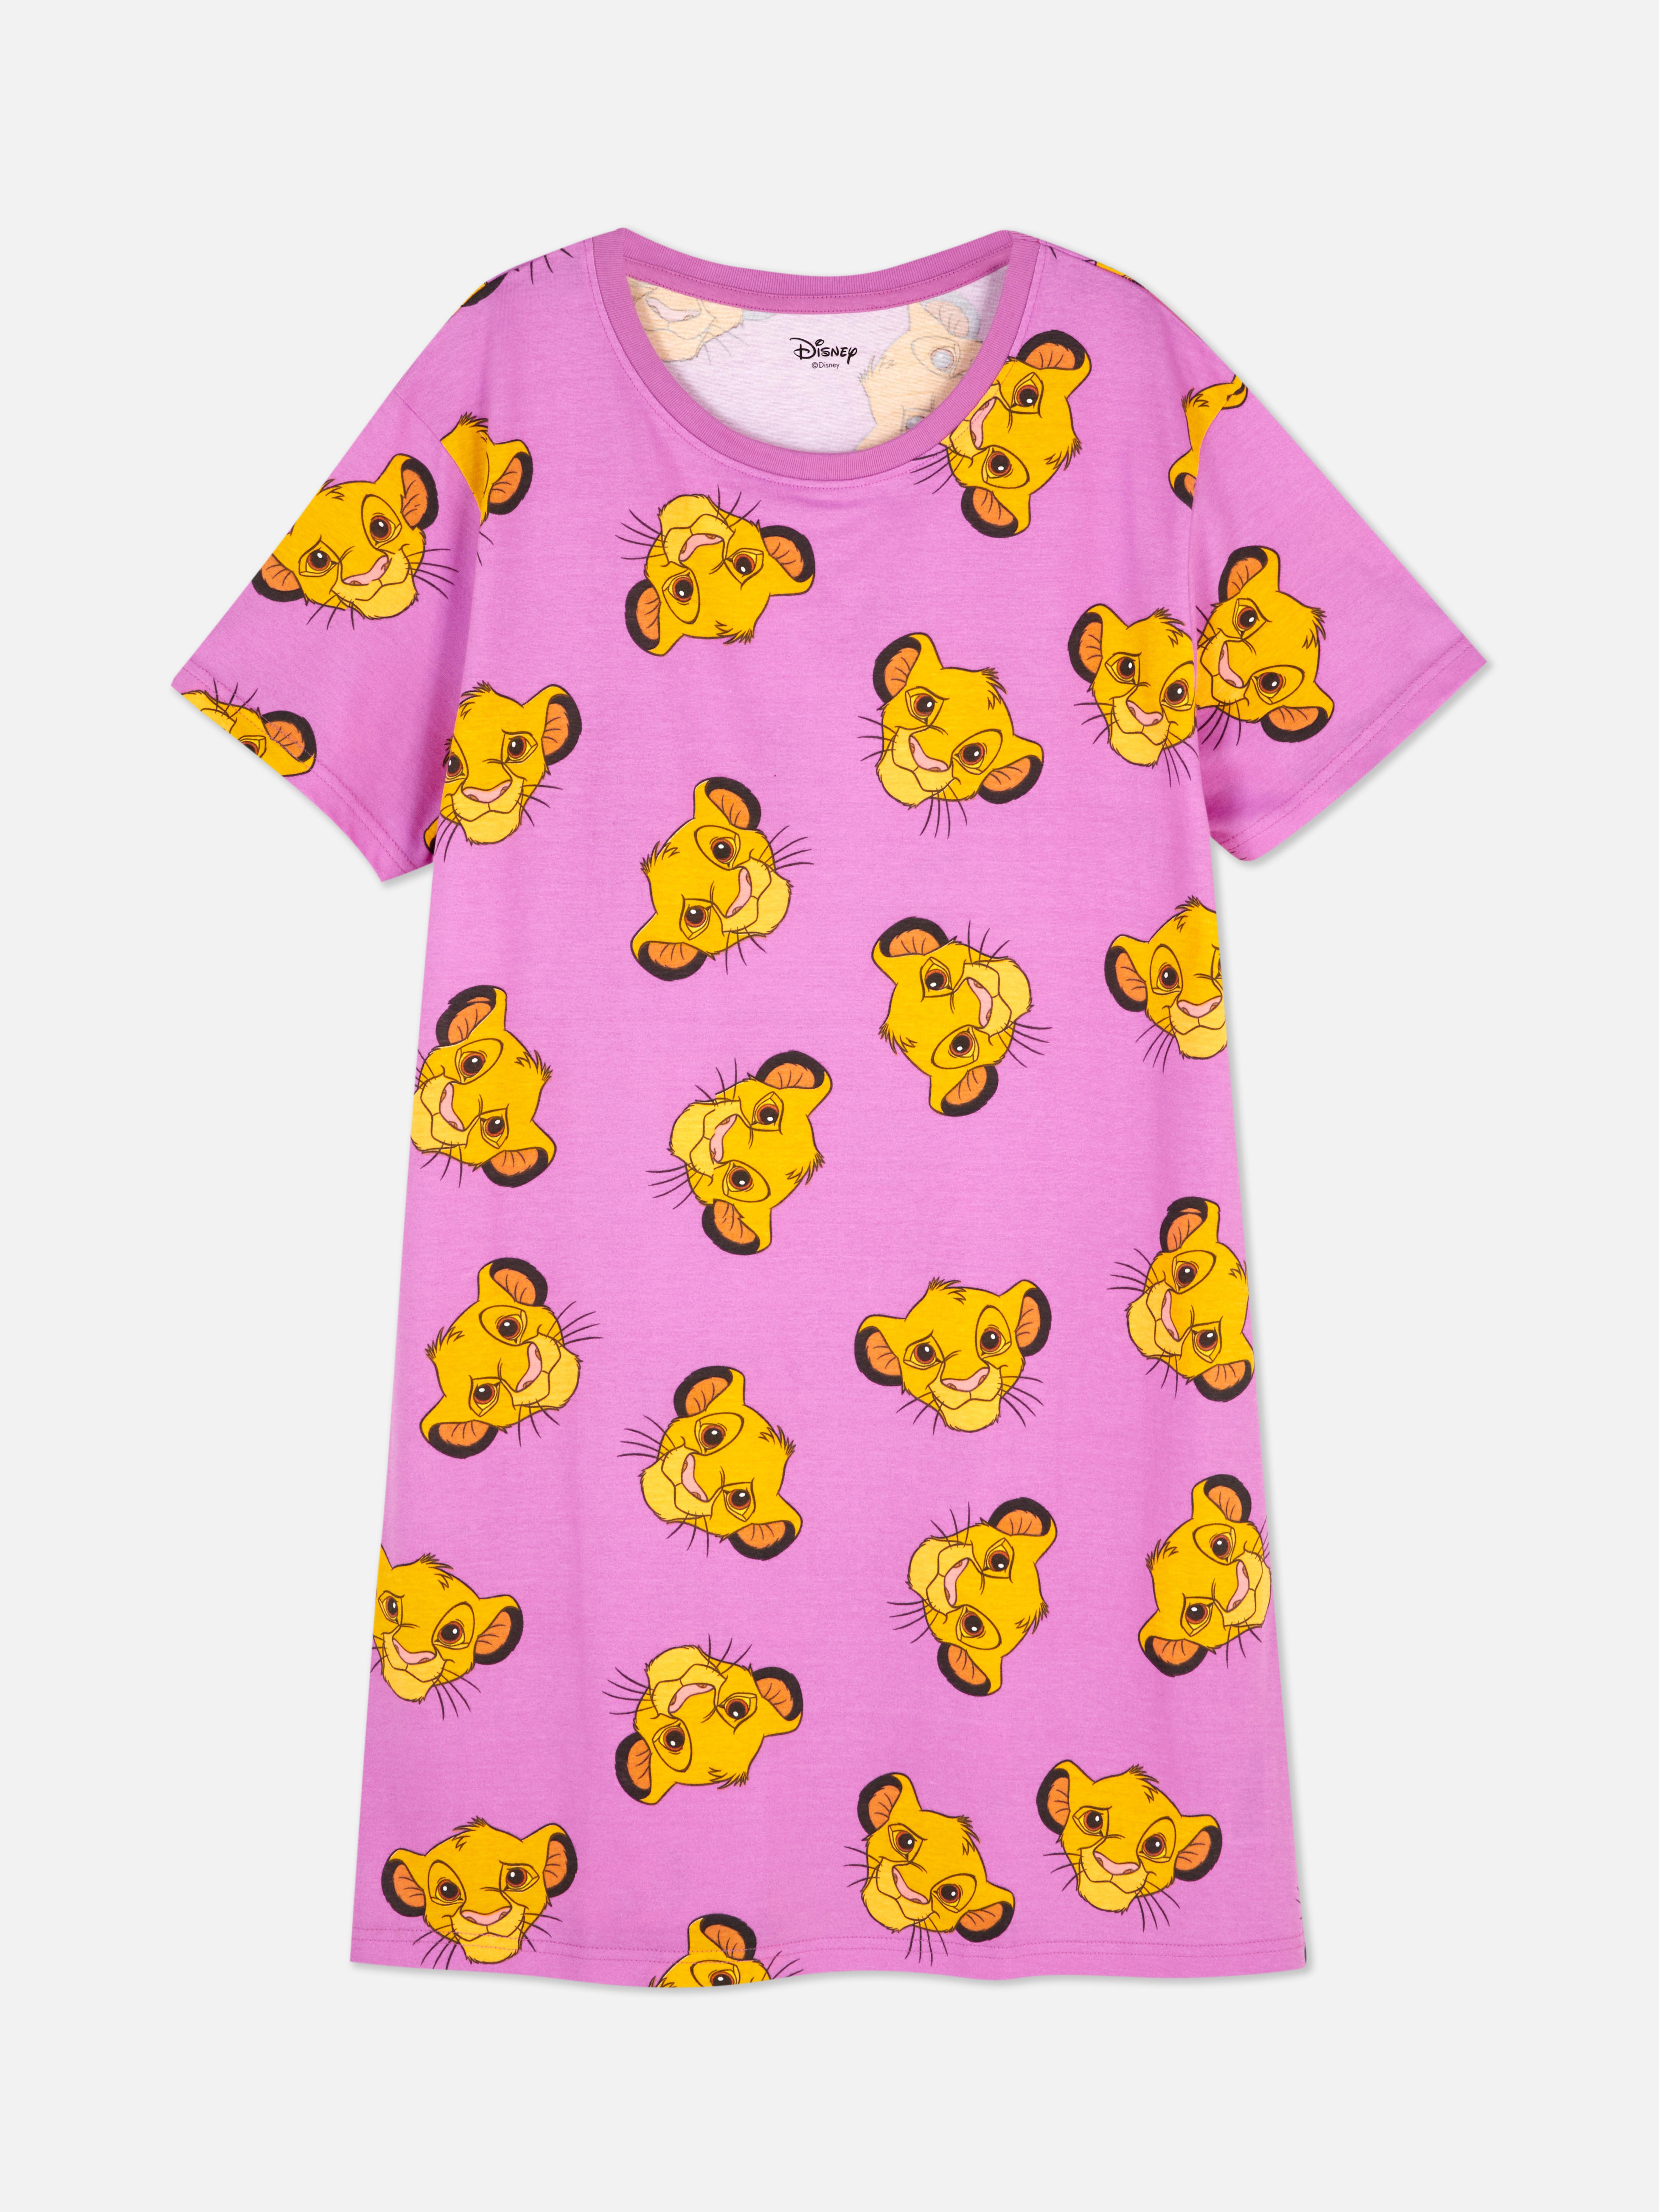 Disney's Character Sleep T-Shirt